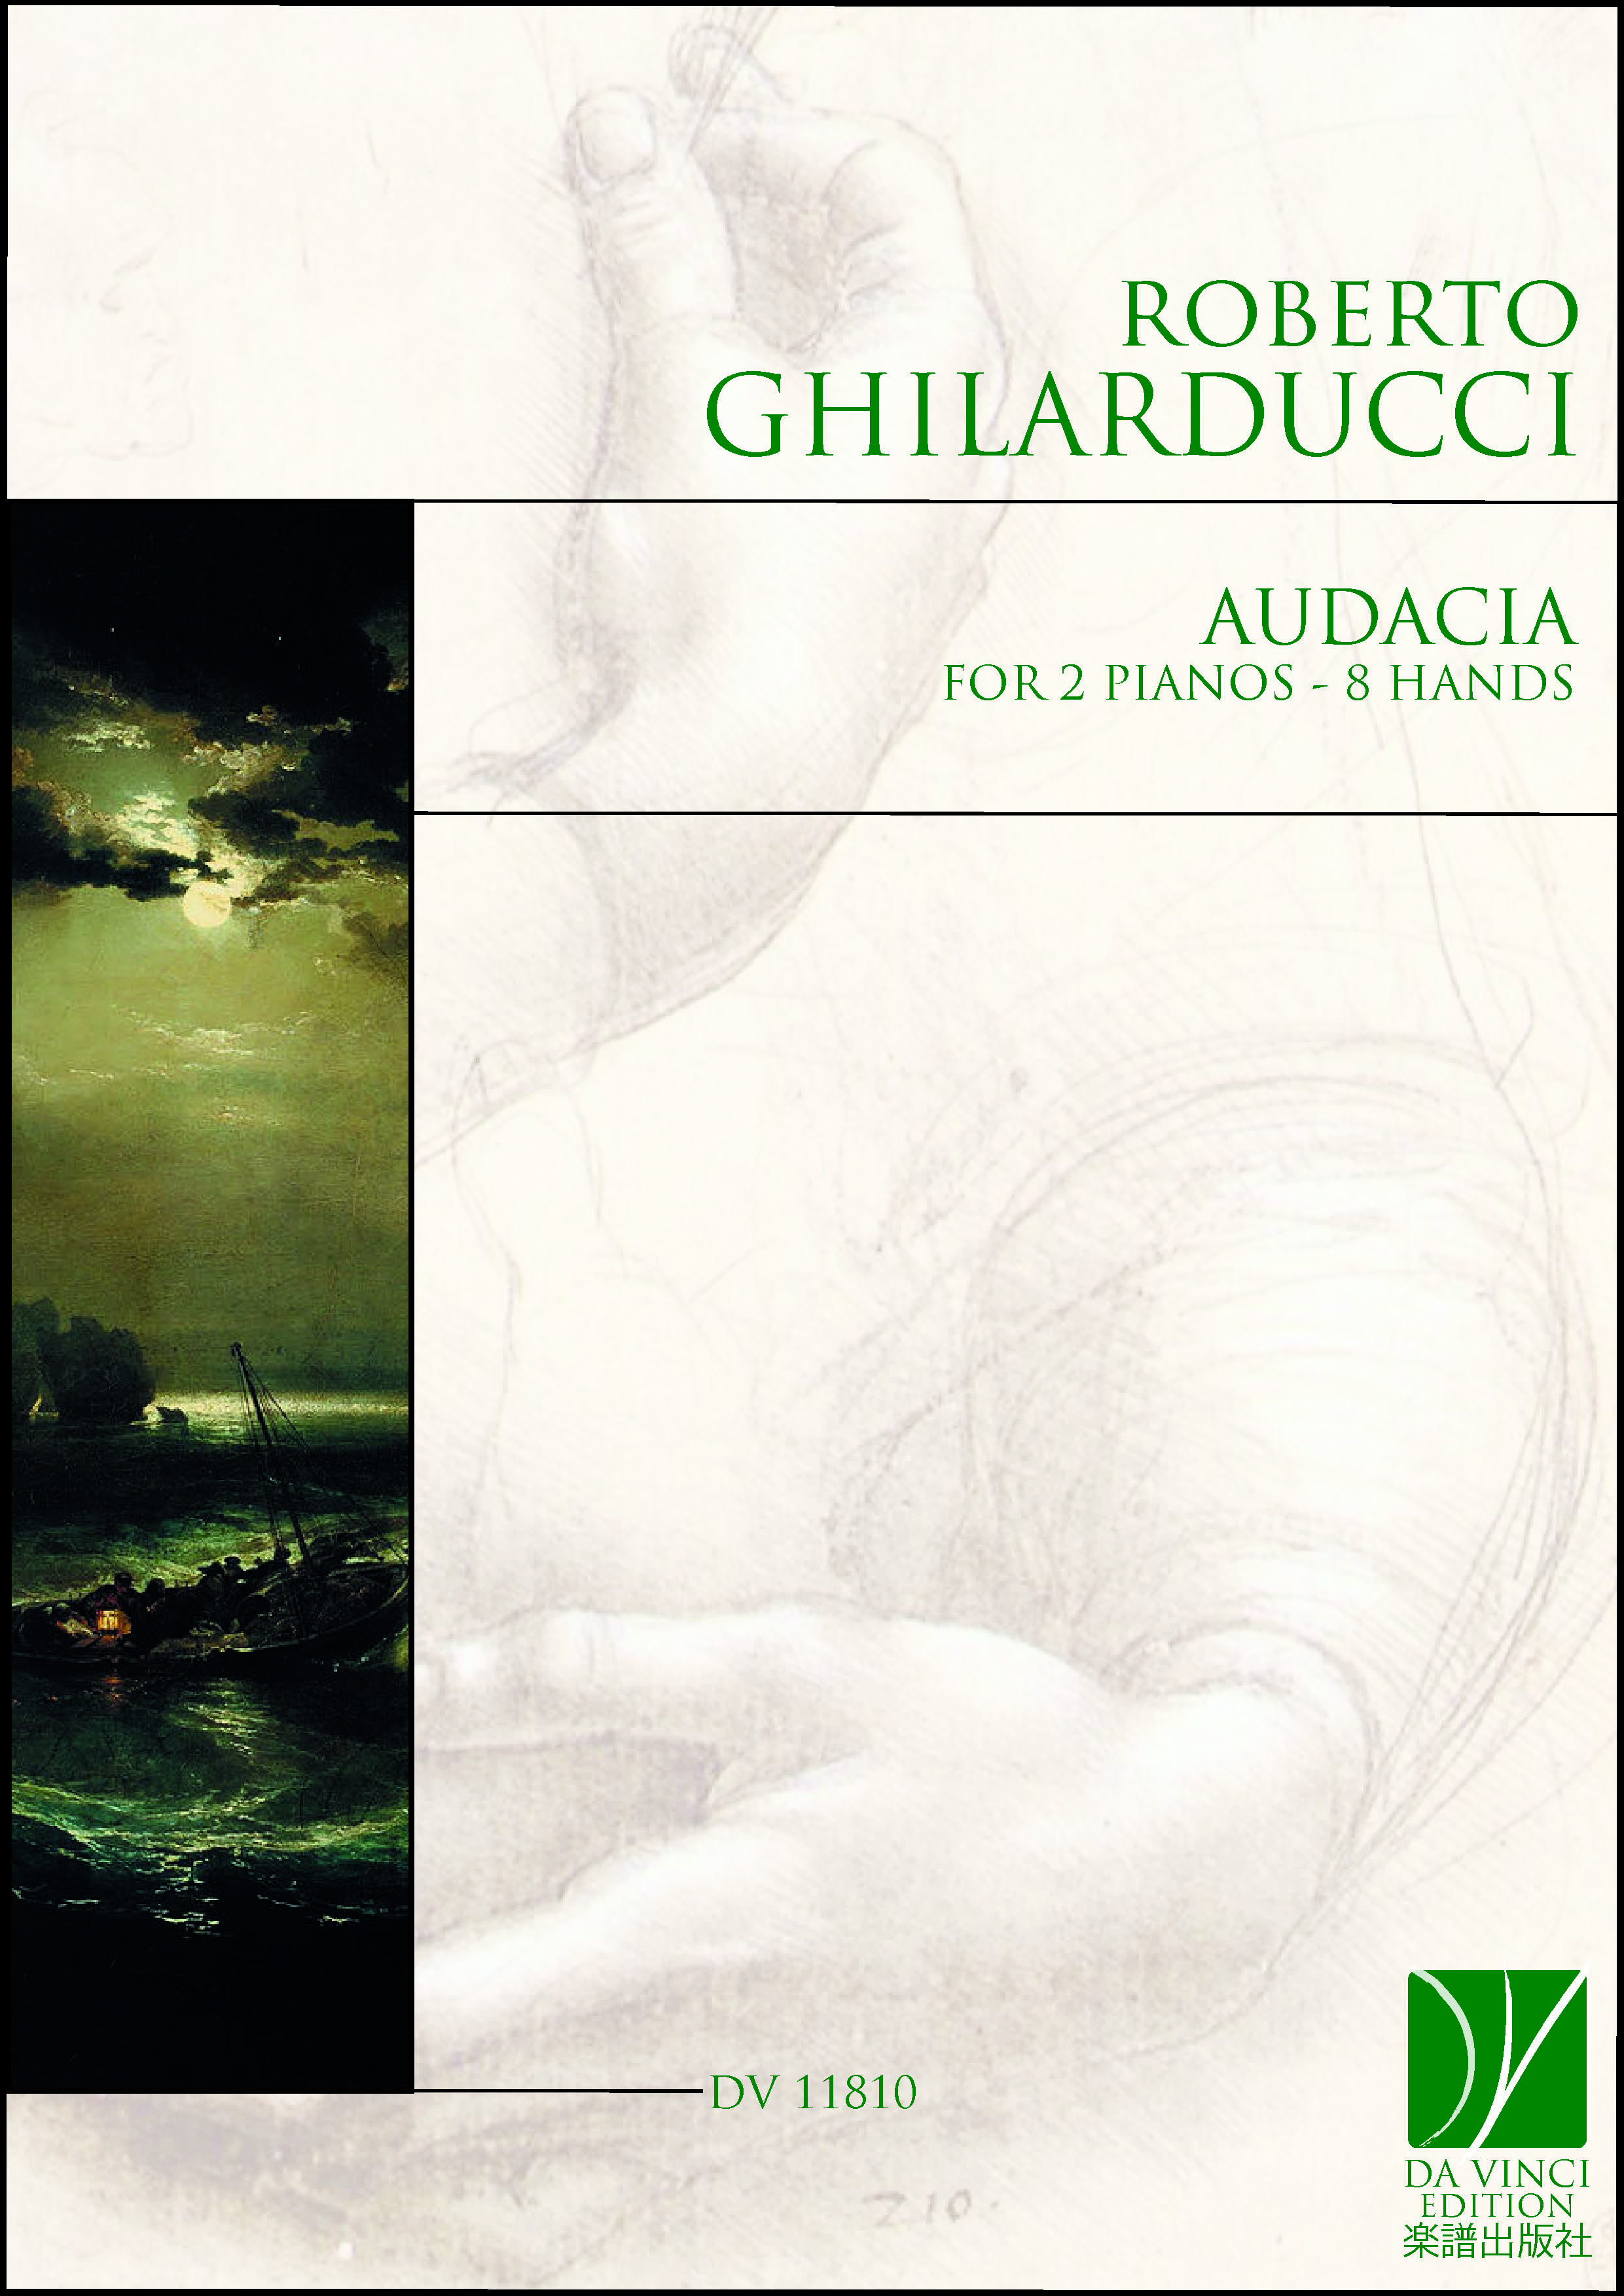 Audacia, for 2 Pianos - 8 Hands (GHILARDUCCI ROBERTO)